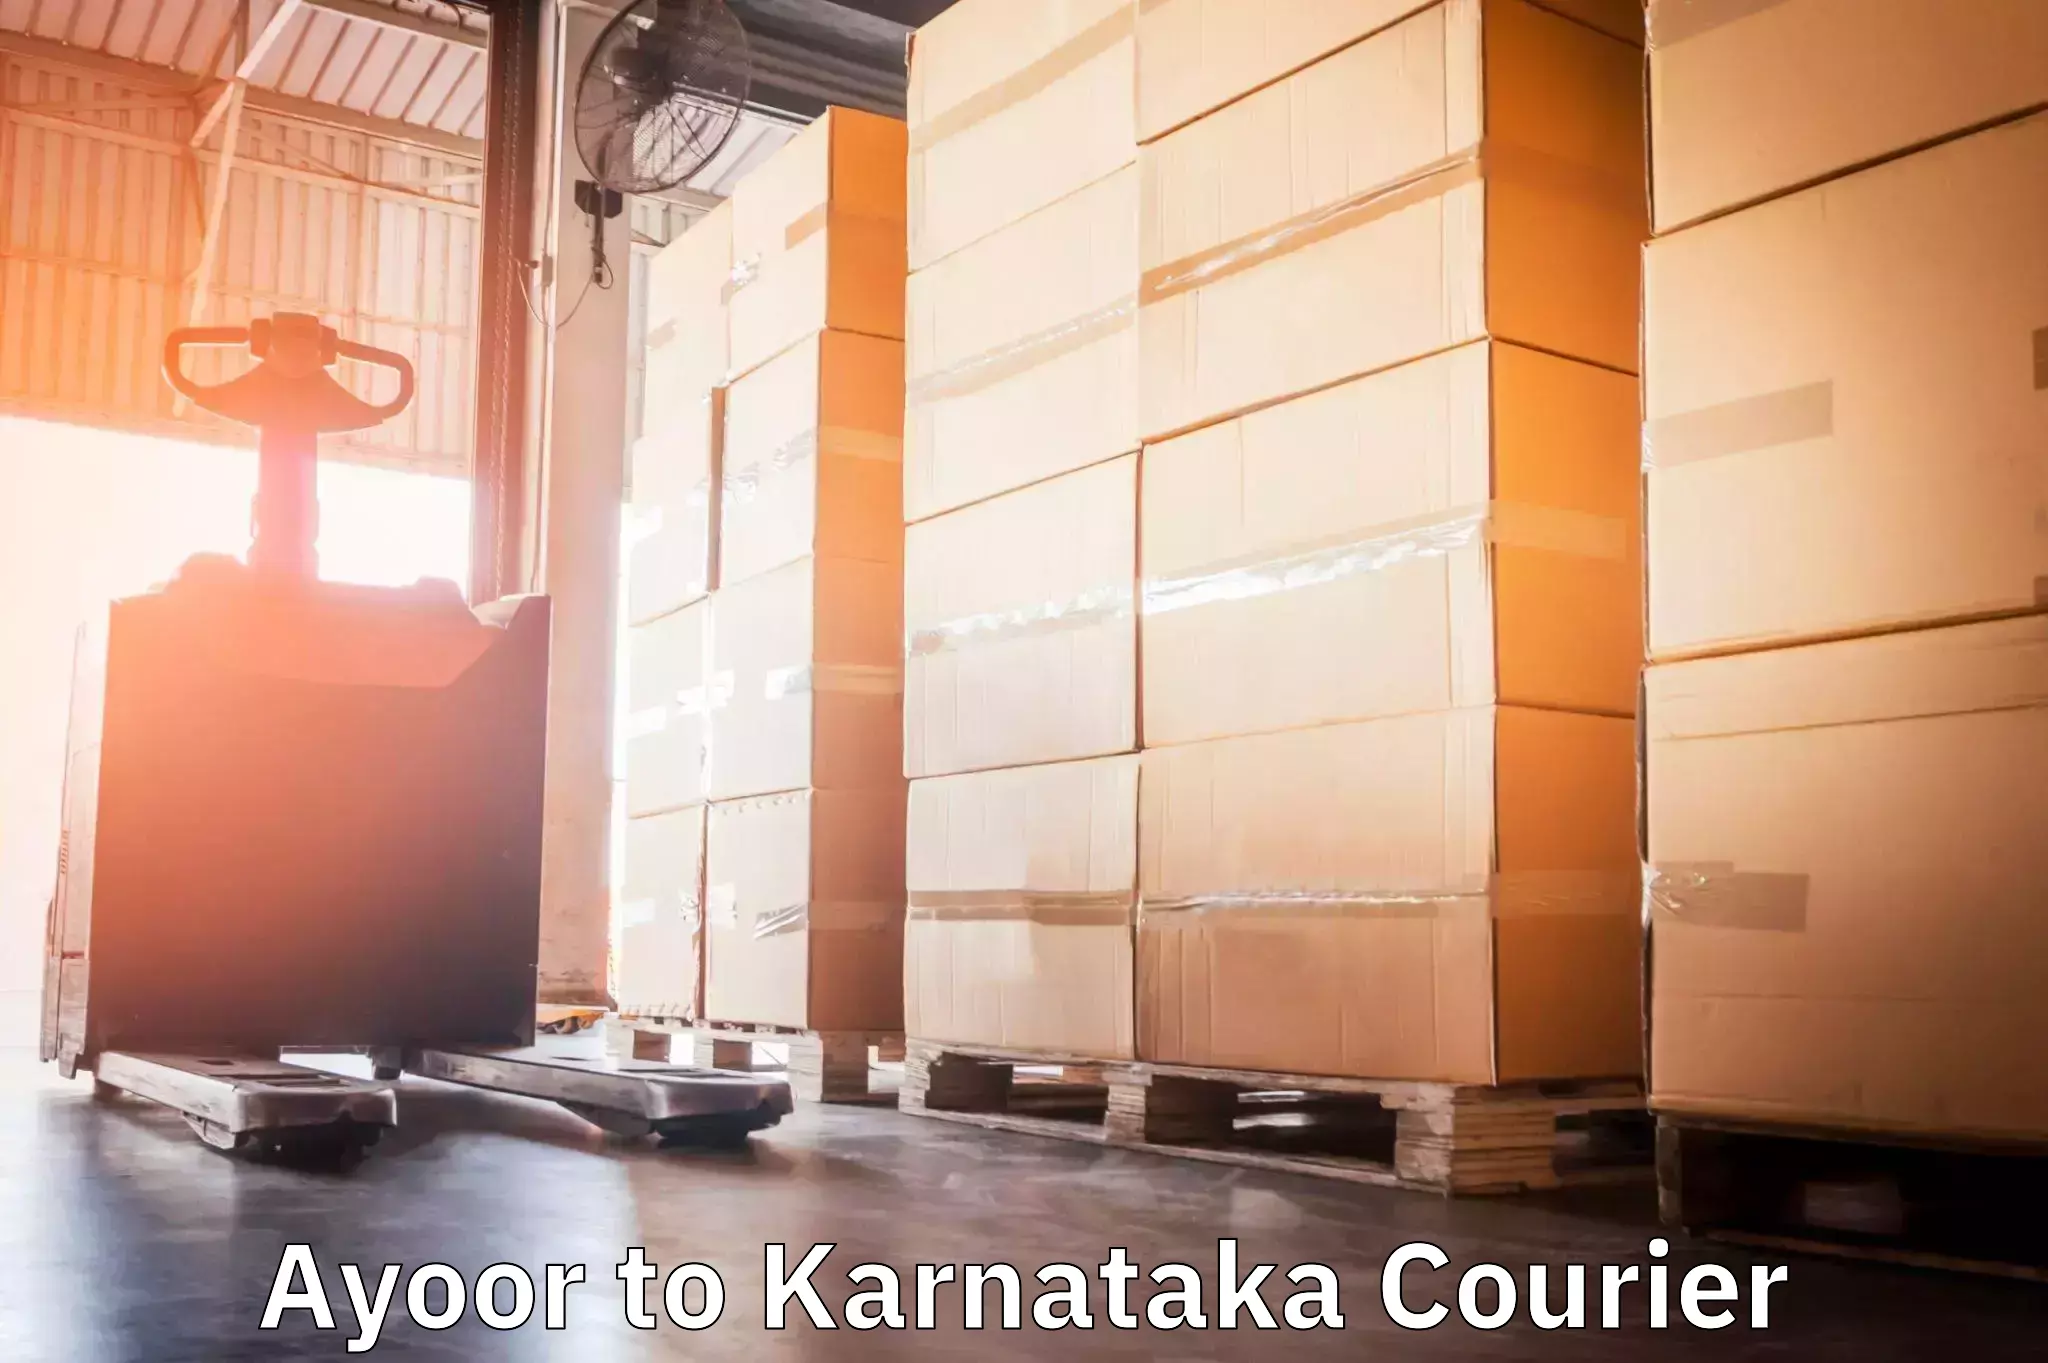 Next-day freight services Ayoor to Karnataka